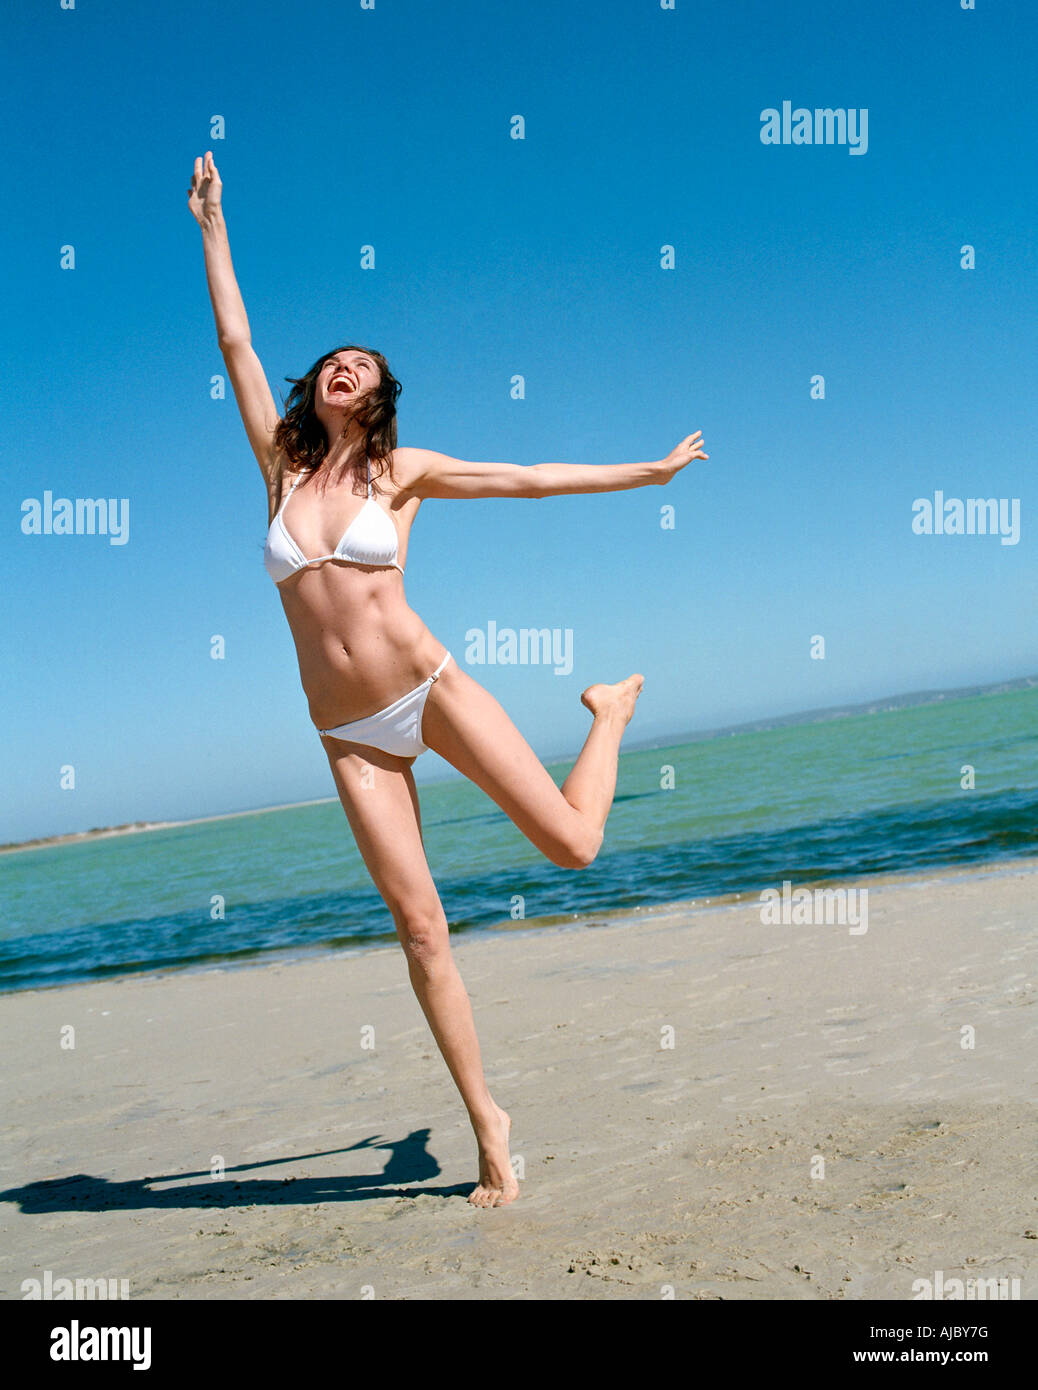 Full Length View of a Woman in a Bikini on the Beach Stock Photo